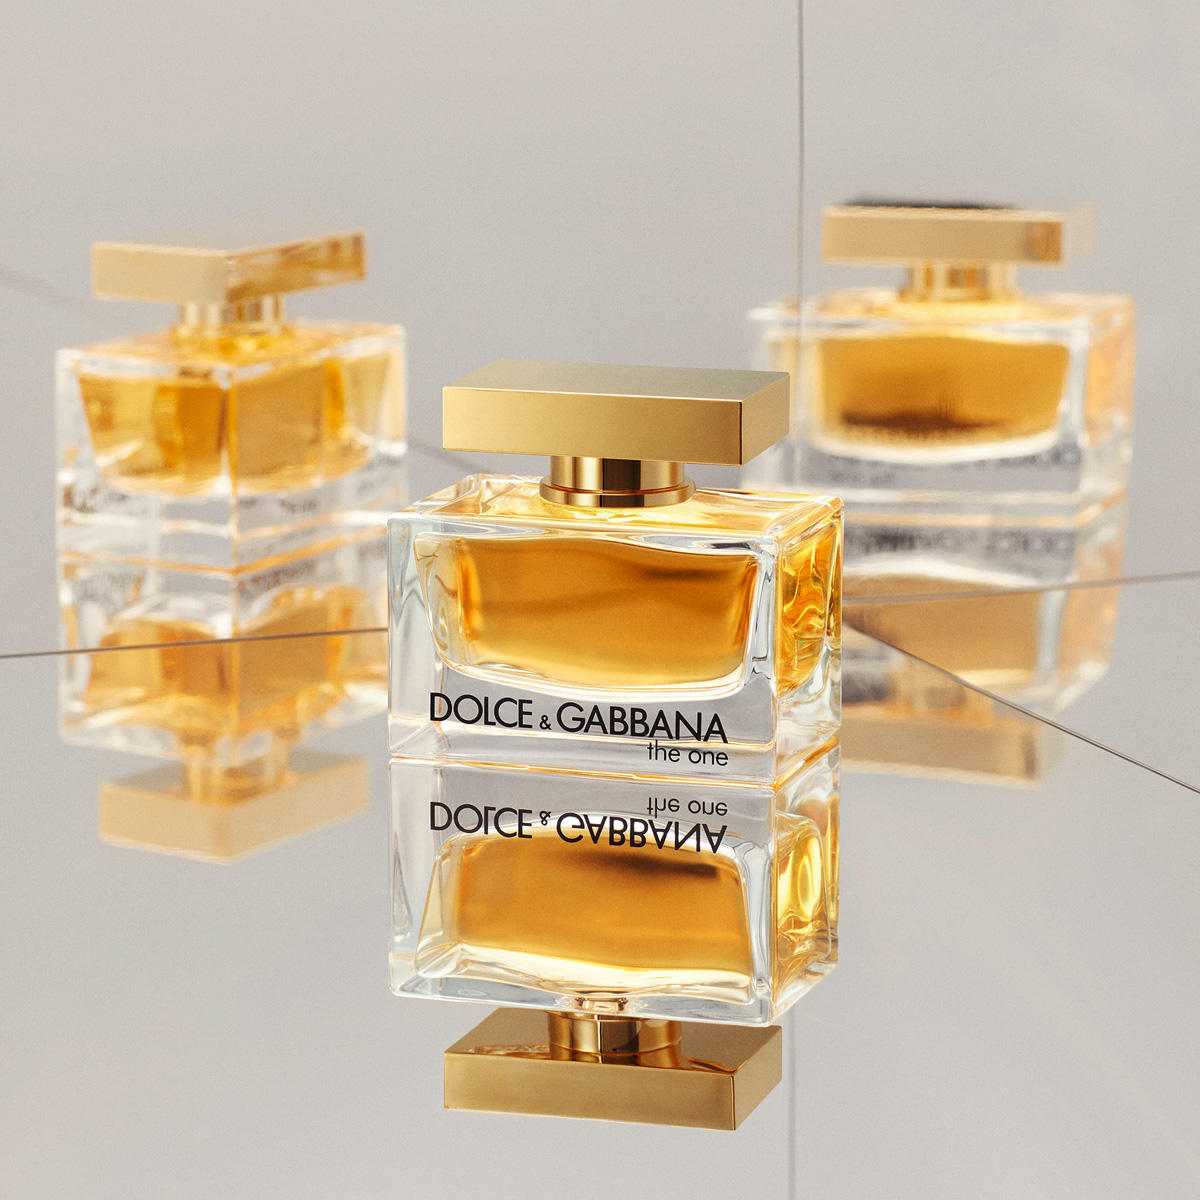 Dolce&Gabbana The One Eau de Parfum 30 ml - 4